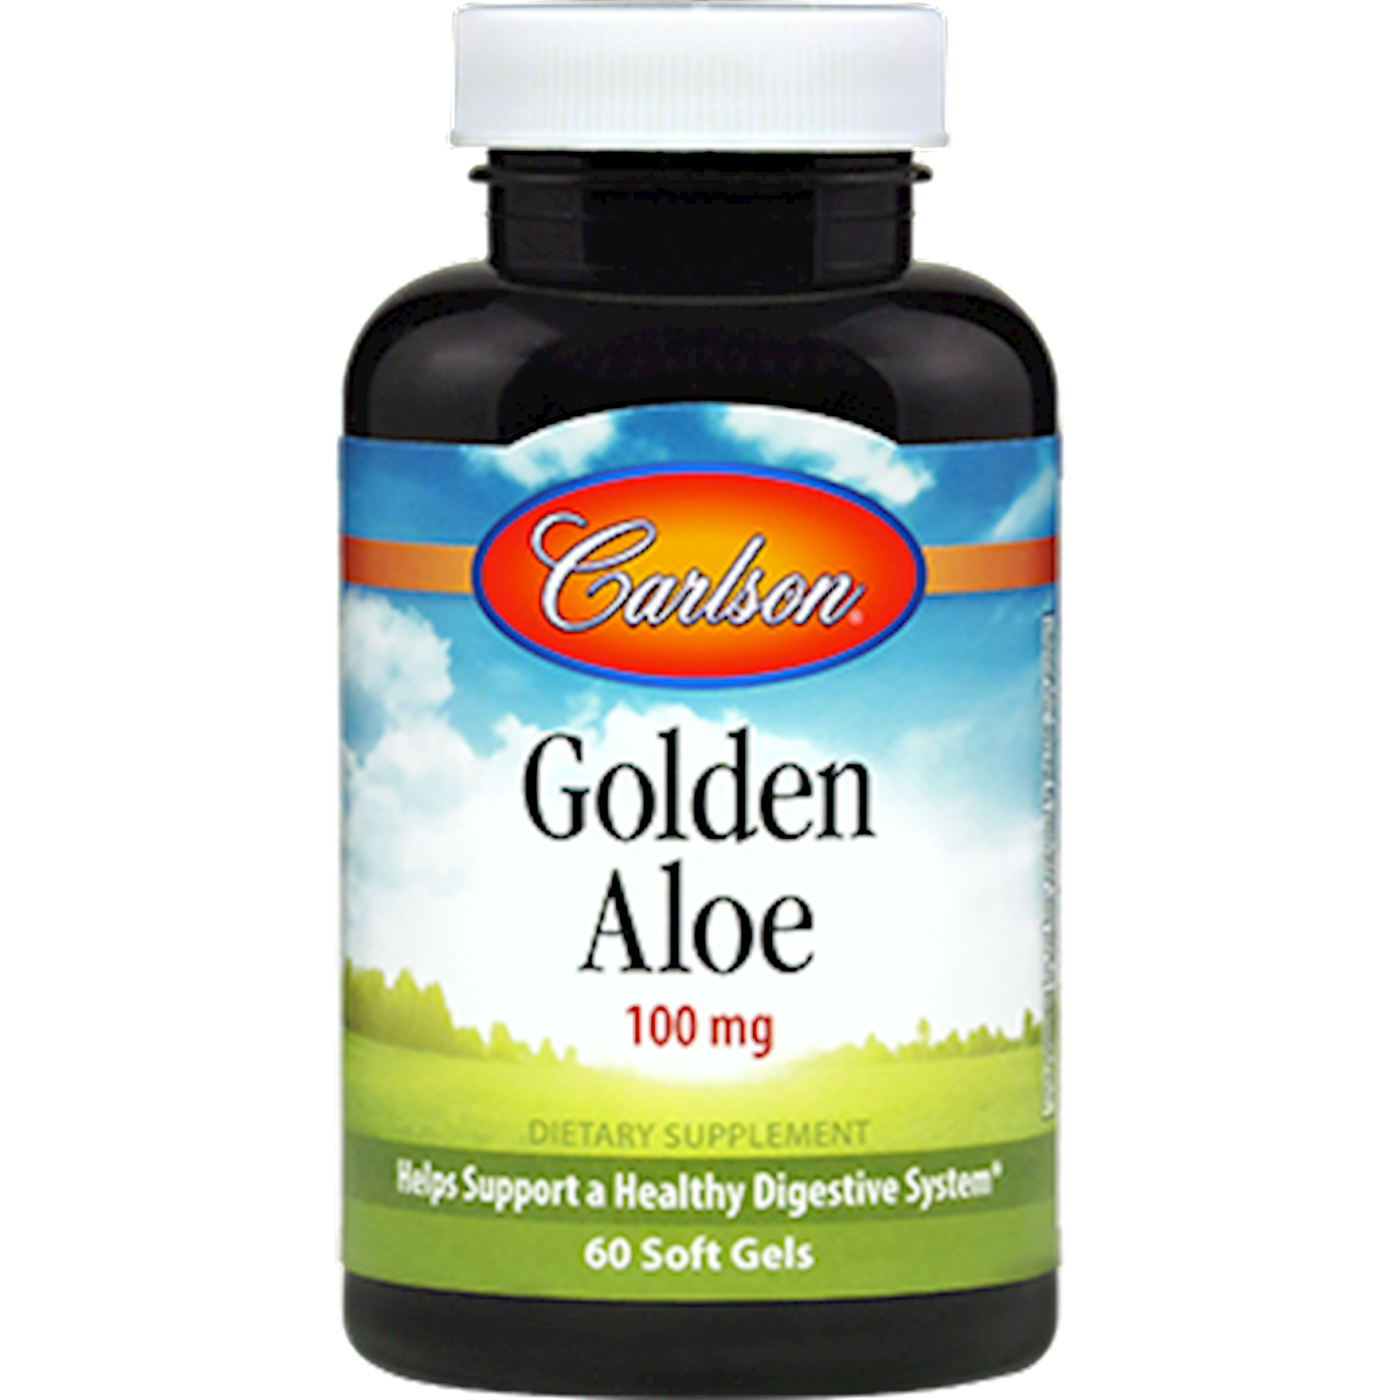 Golden Aloe 60 gels Curated Wellness